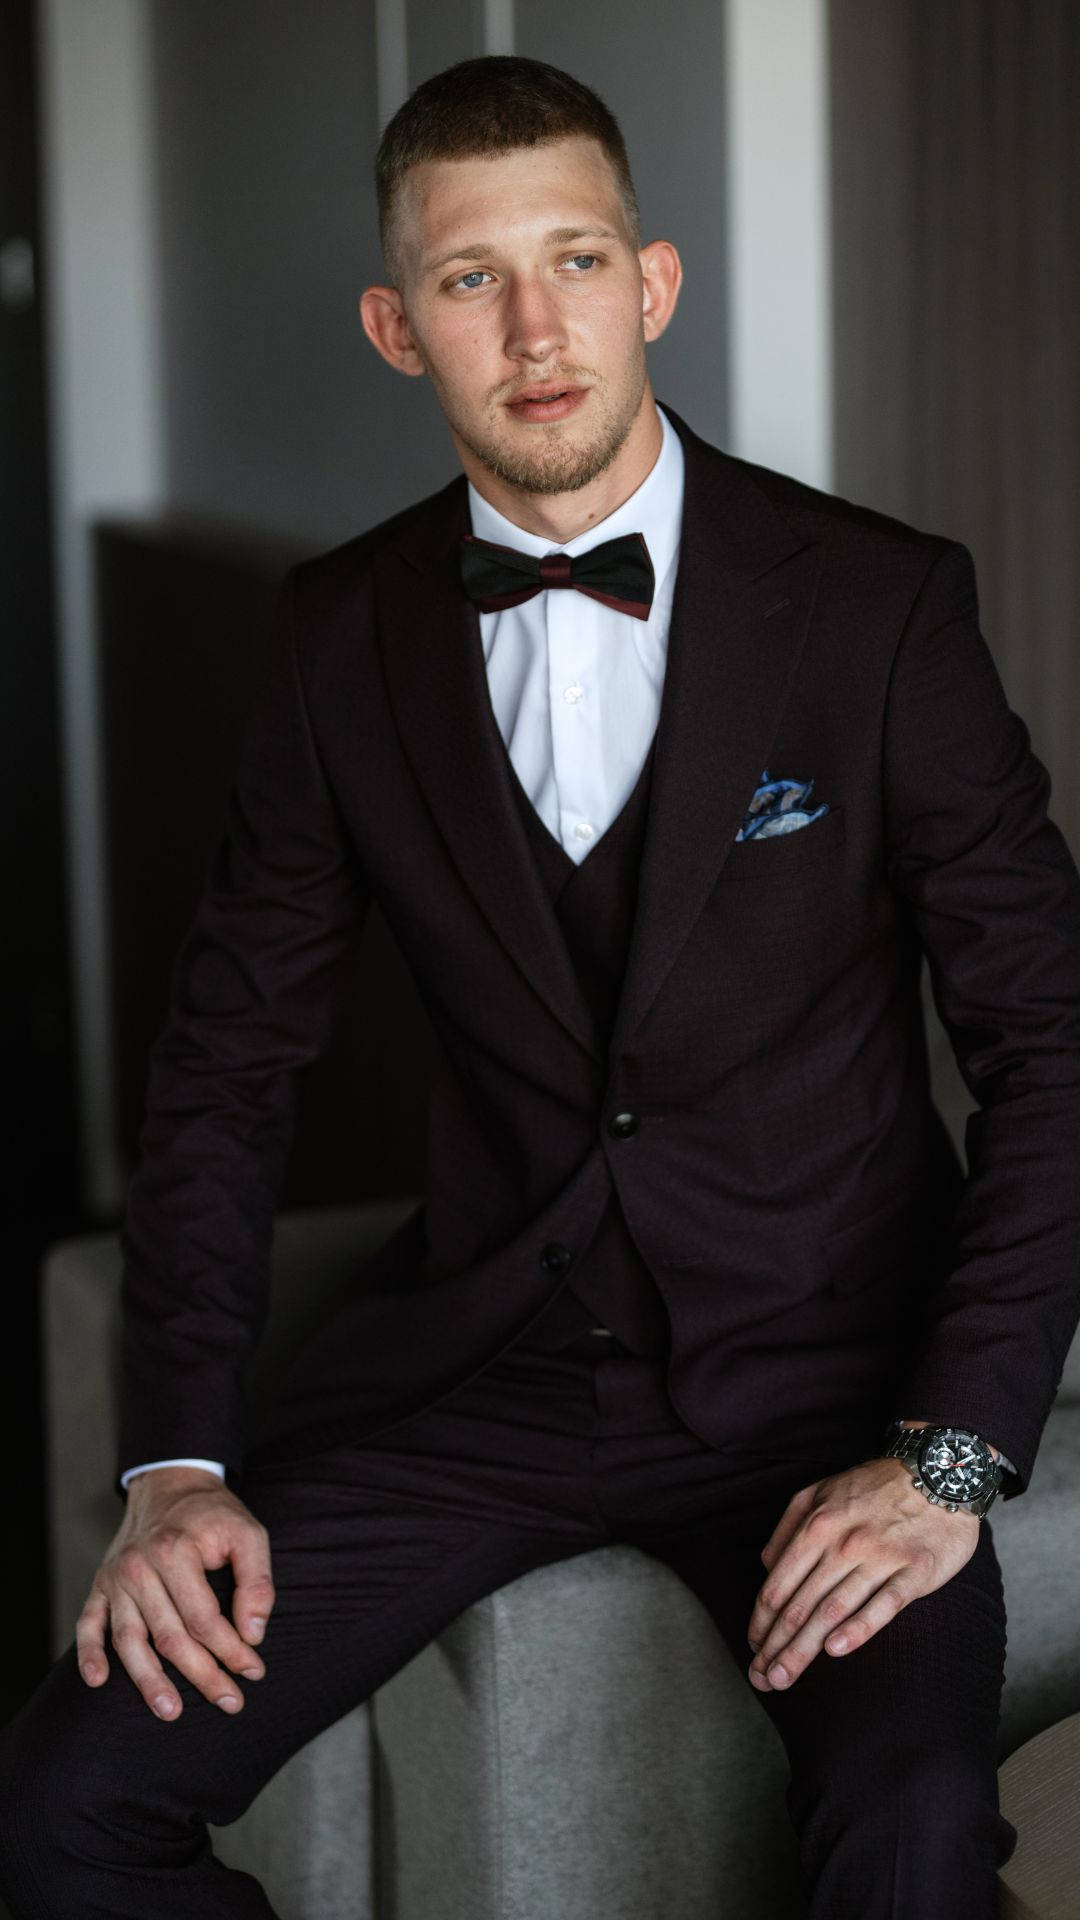 Tuxedo Suit Handsome Wear Background